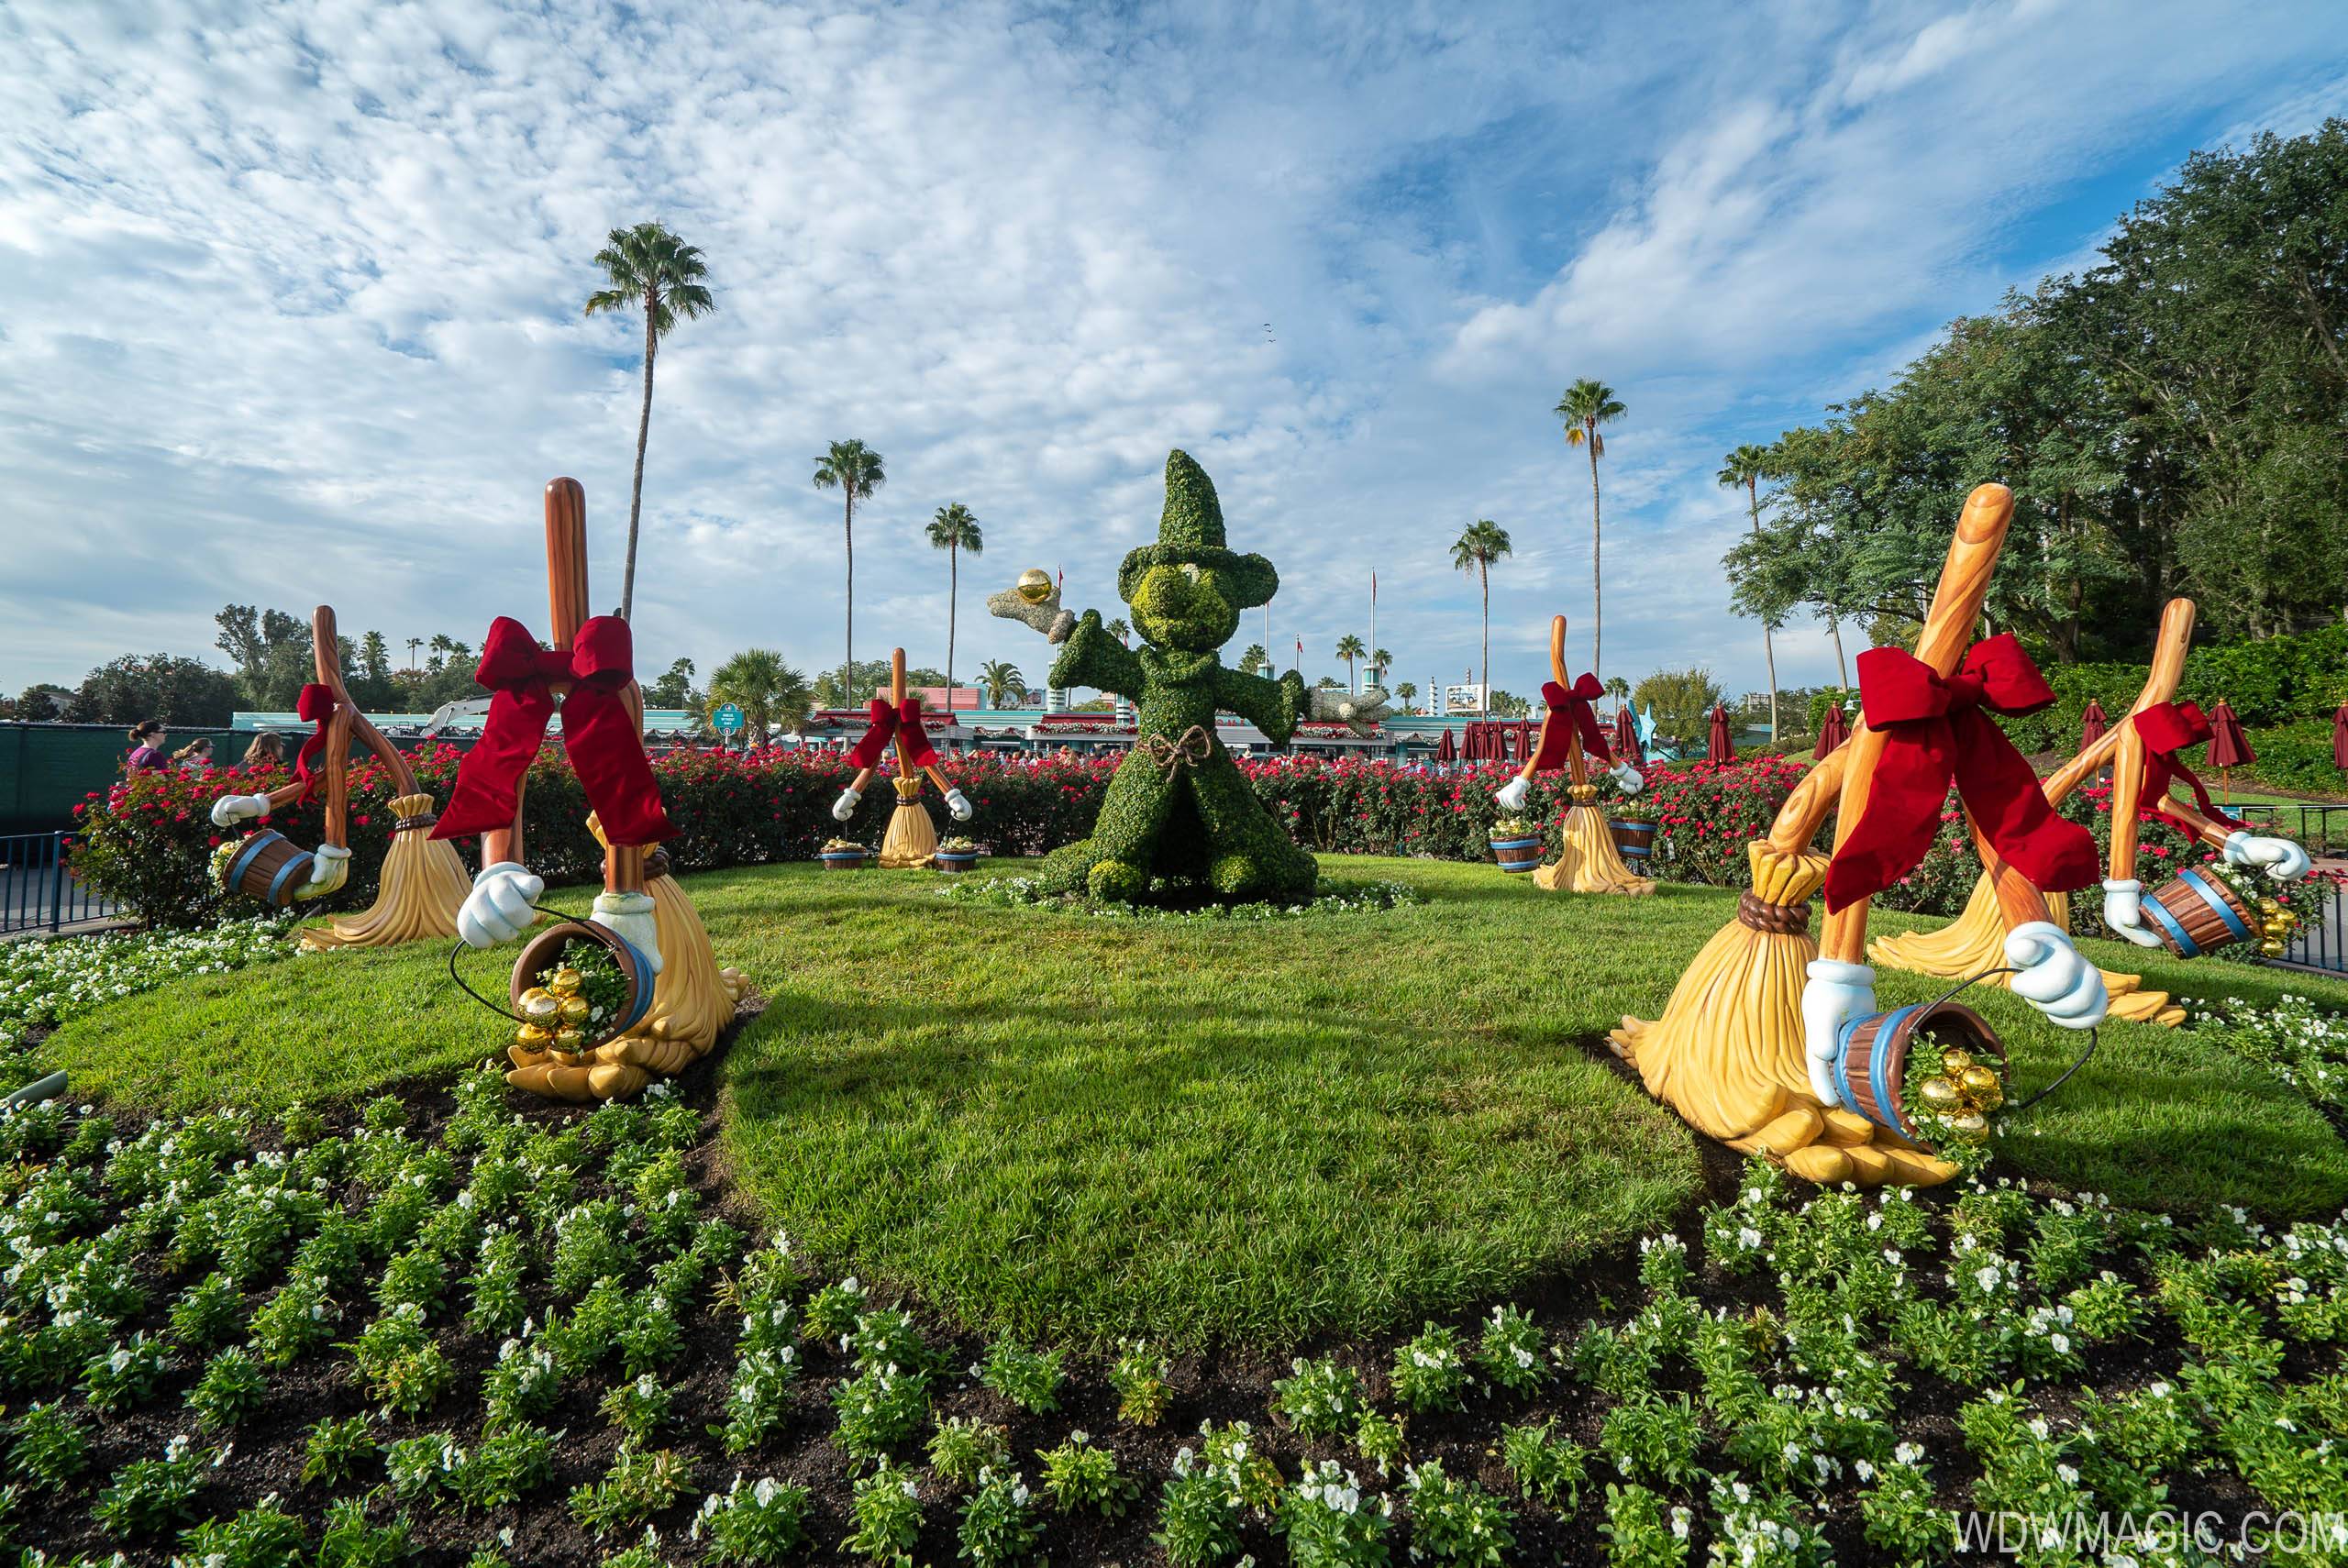 PHOTOS - 2018 Holiday Decor at Disney's Hollywood Studios including Toy Story Land